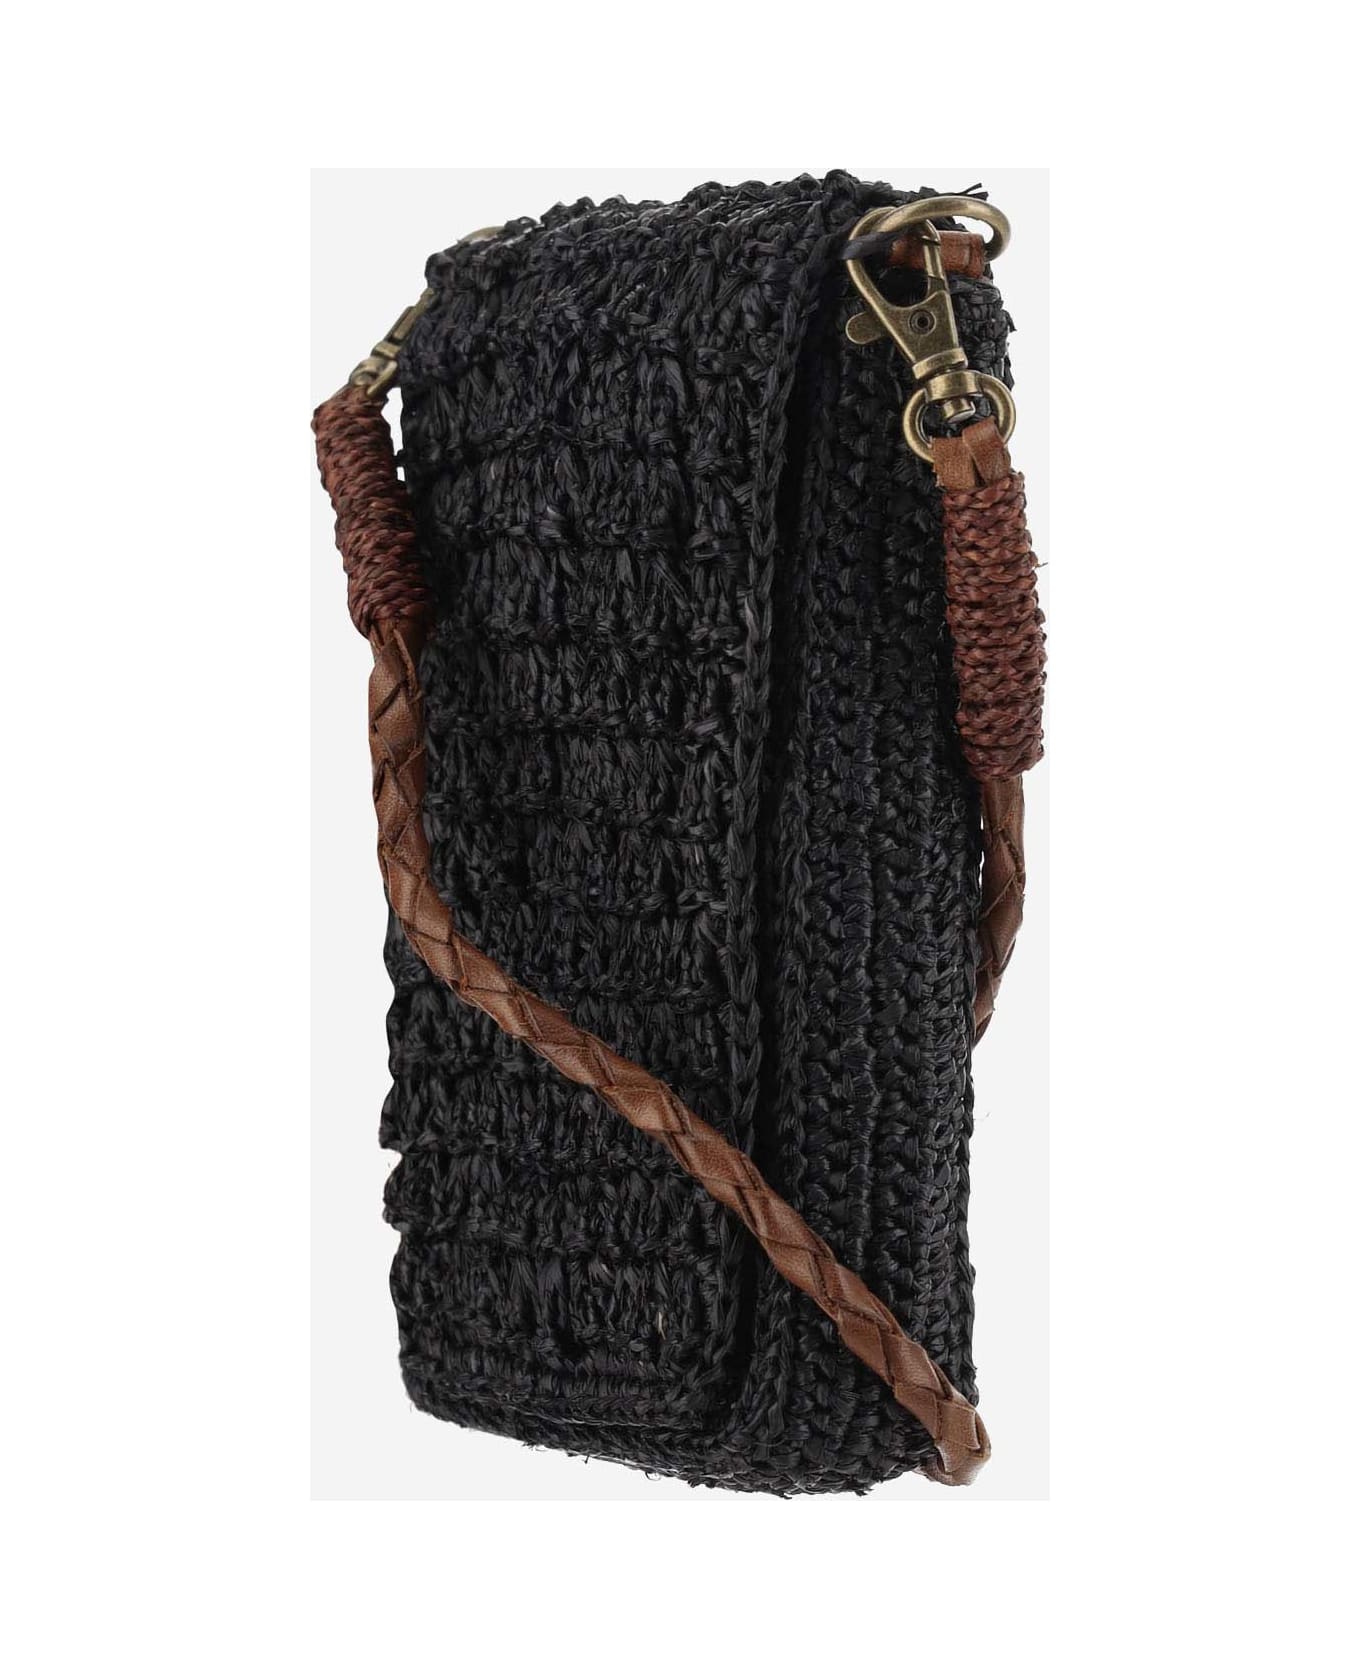 Ibeliv Raffia Bag With Leather Details - Black ショルダーバッグ